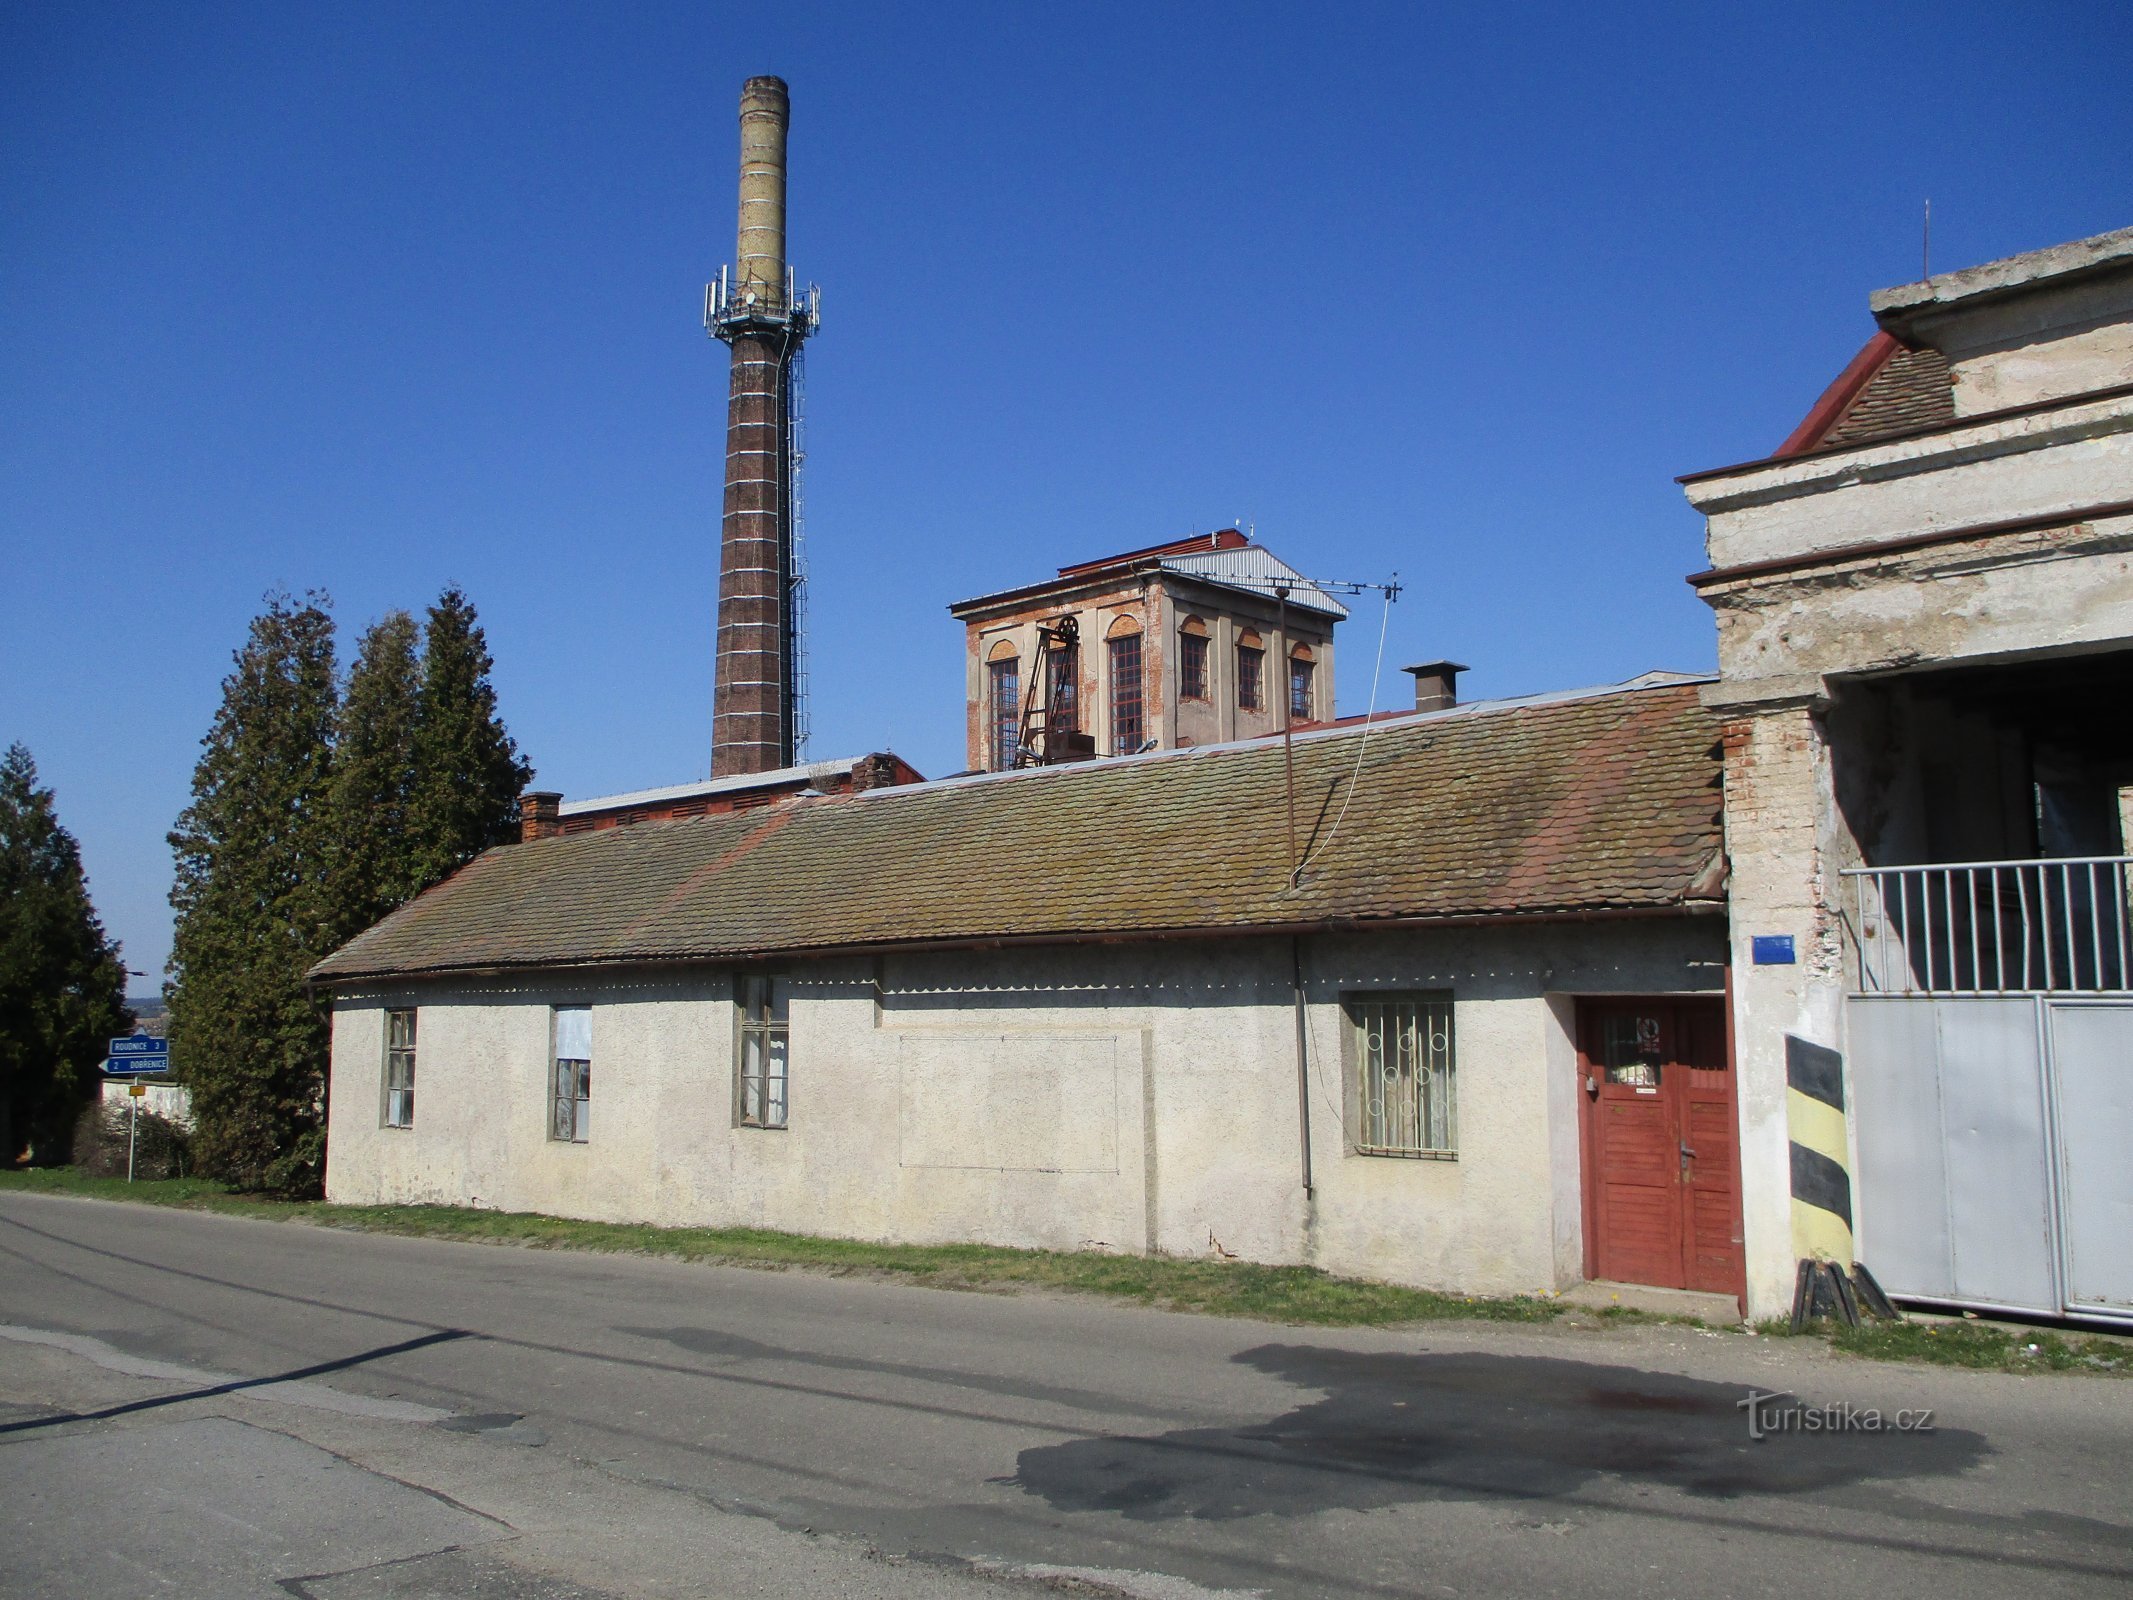 Tidigare sockerfabrik (Syrovátka, 7.4.2020-XNUMX-XNUMX)